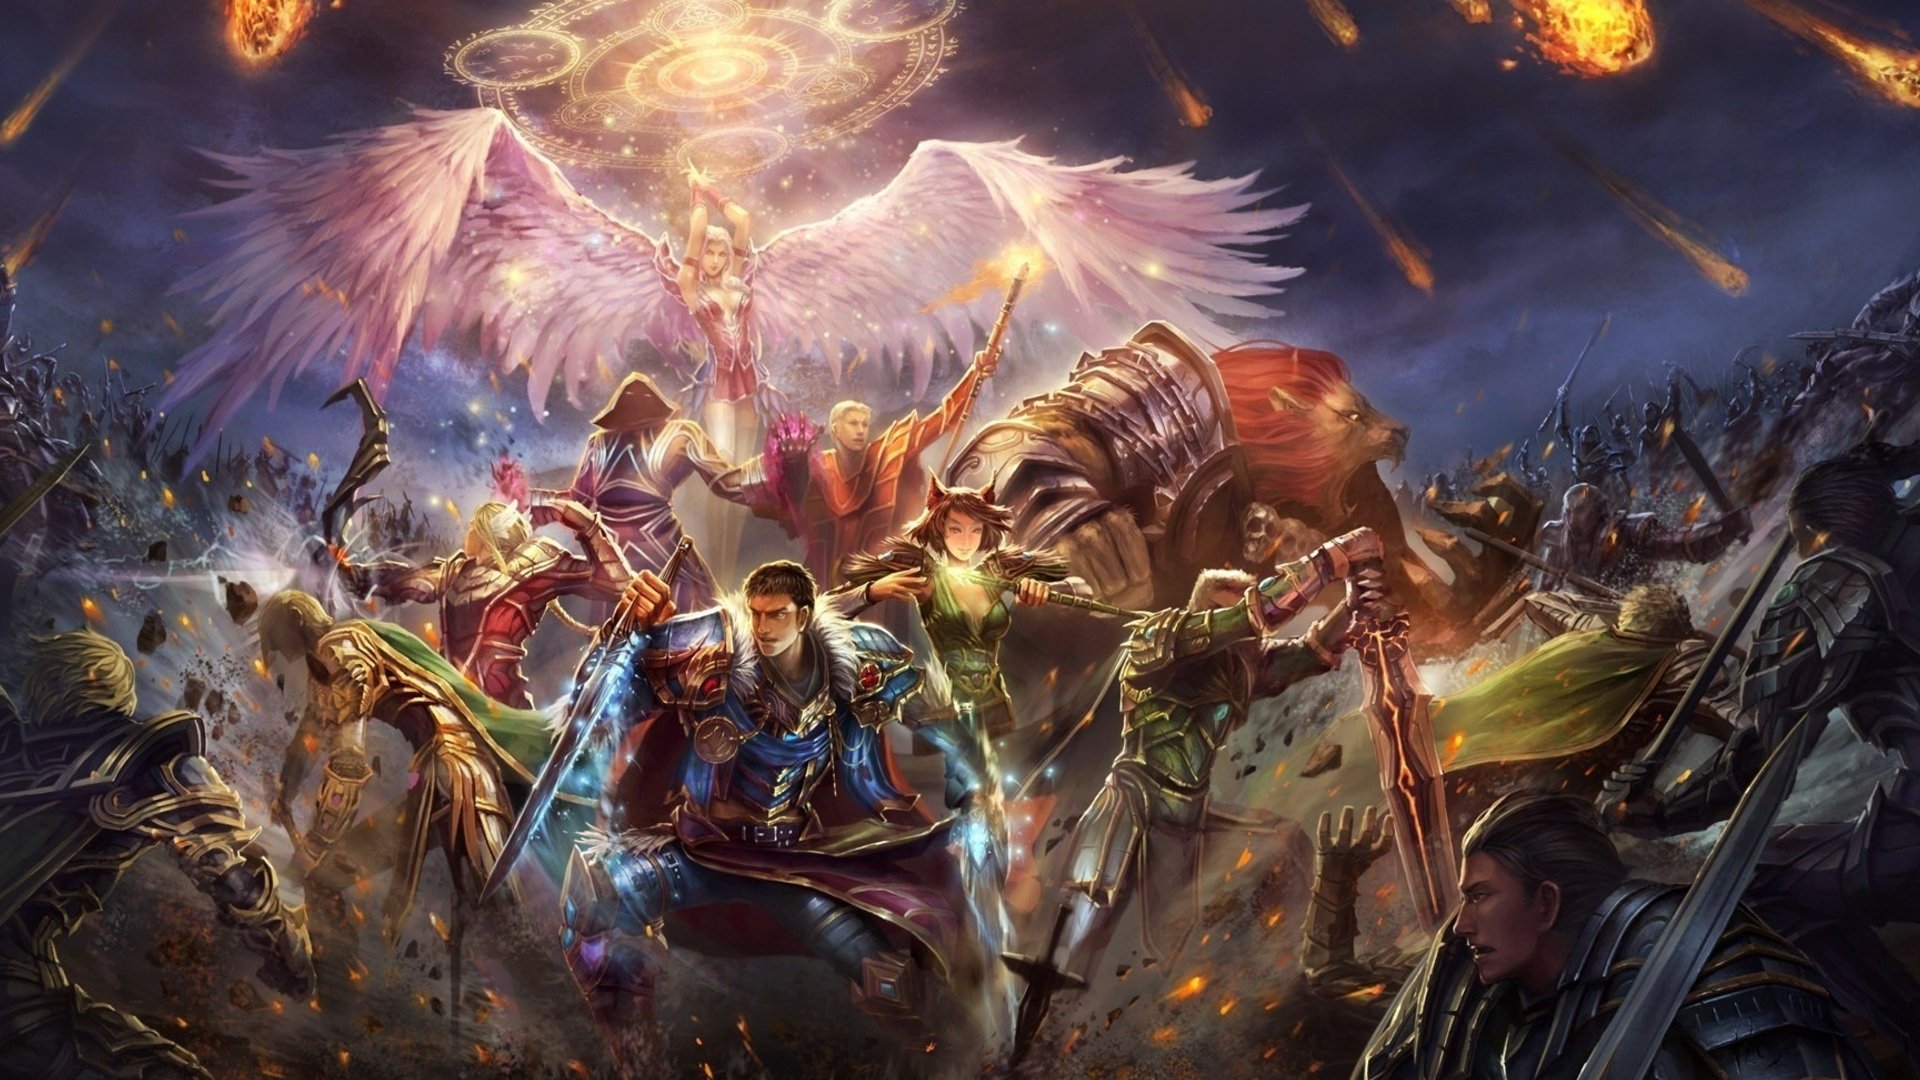 epic battle wallpaper,cg artwork,demon,mythology,action adventure game,strategy video game